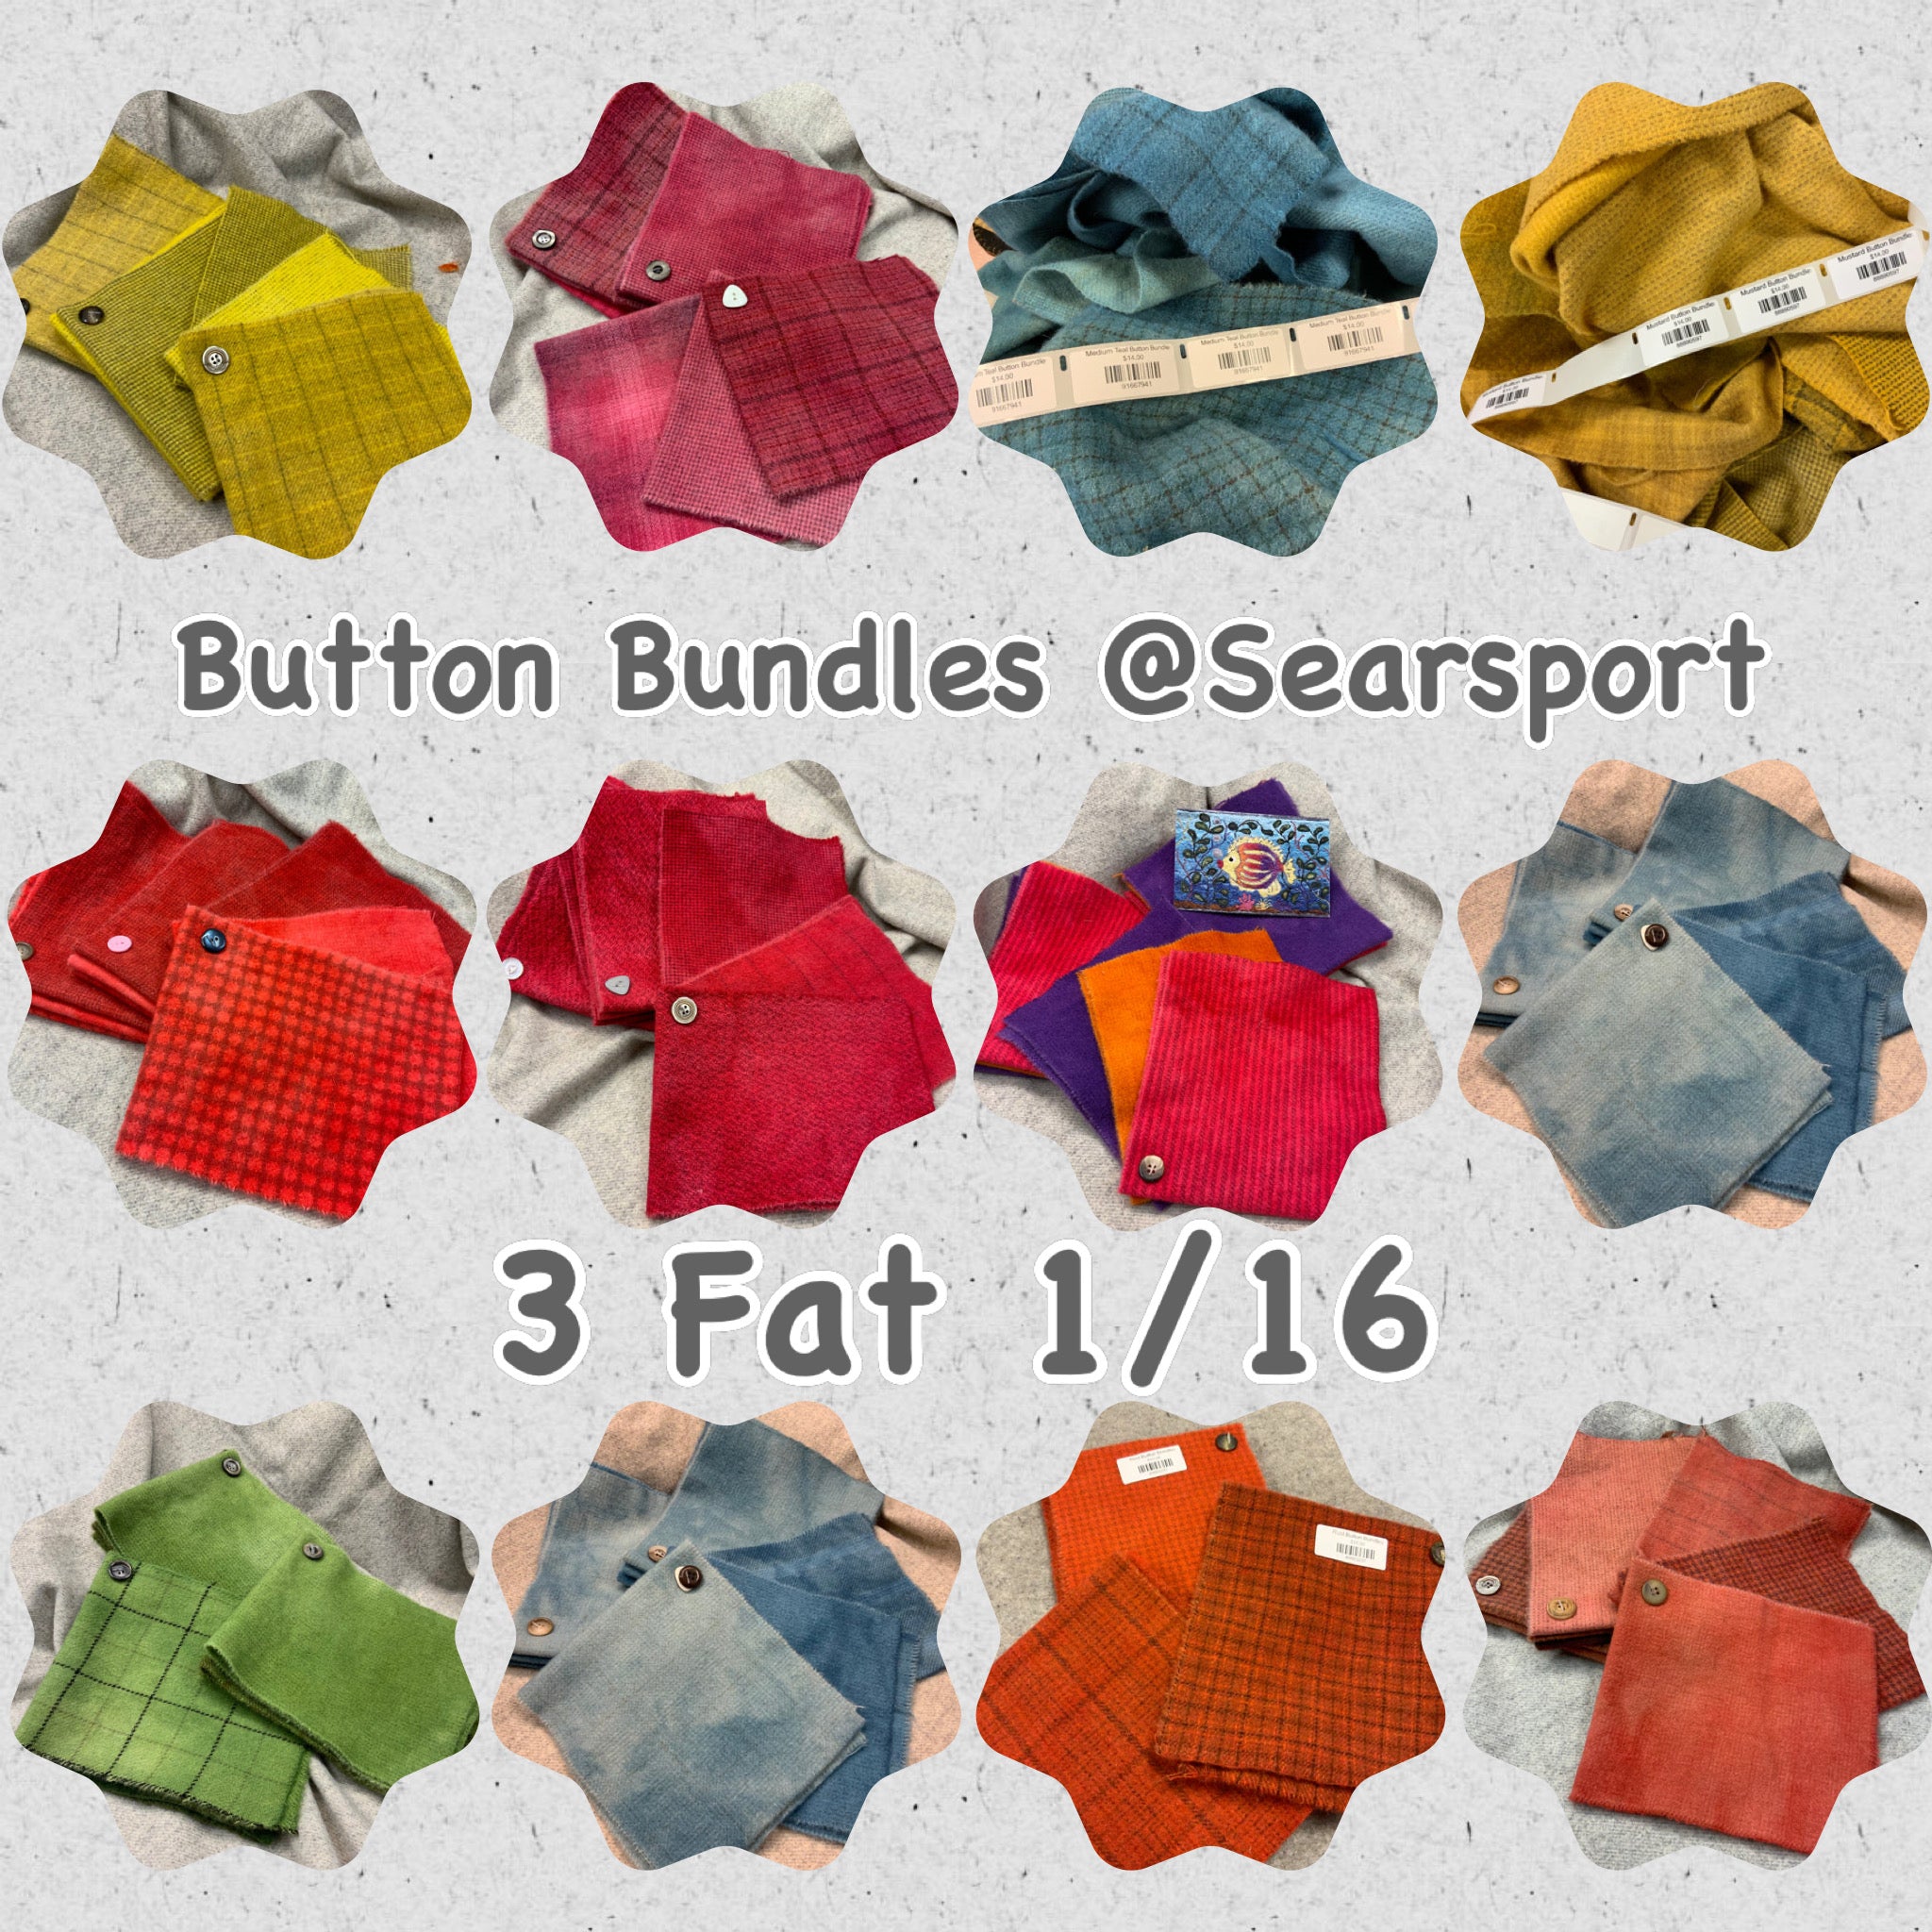 Button bundles